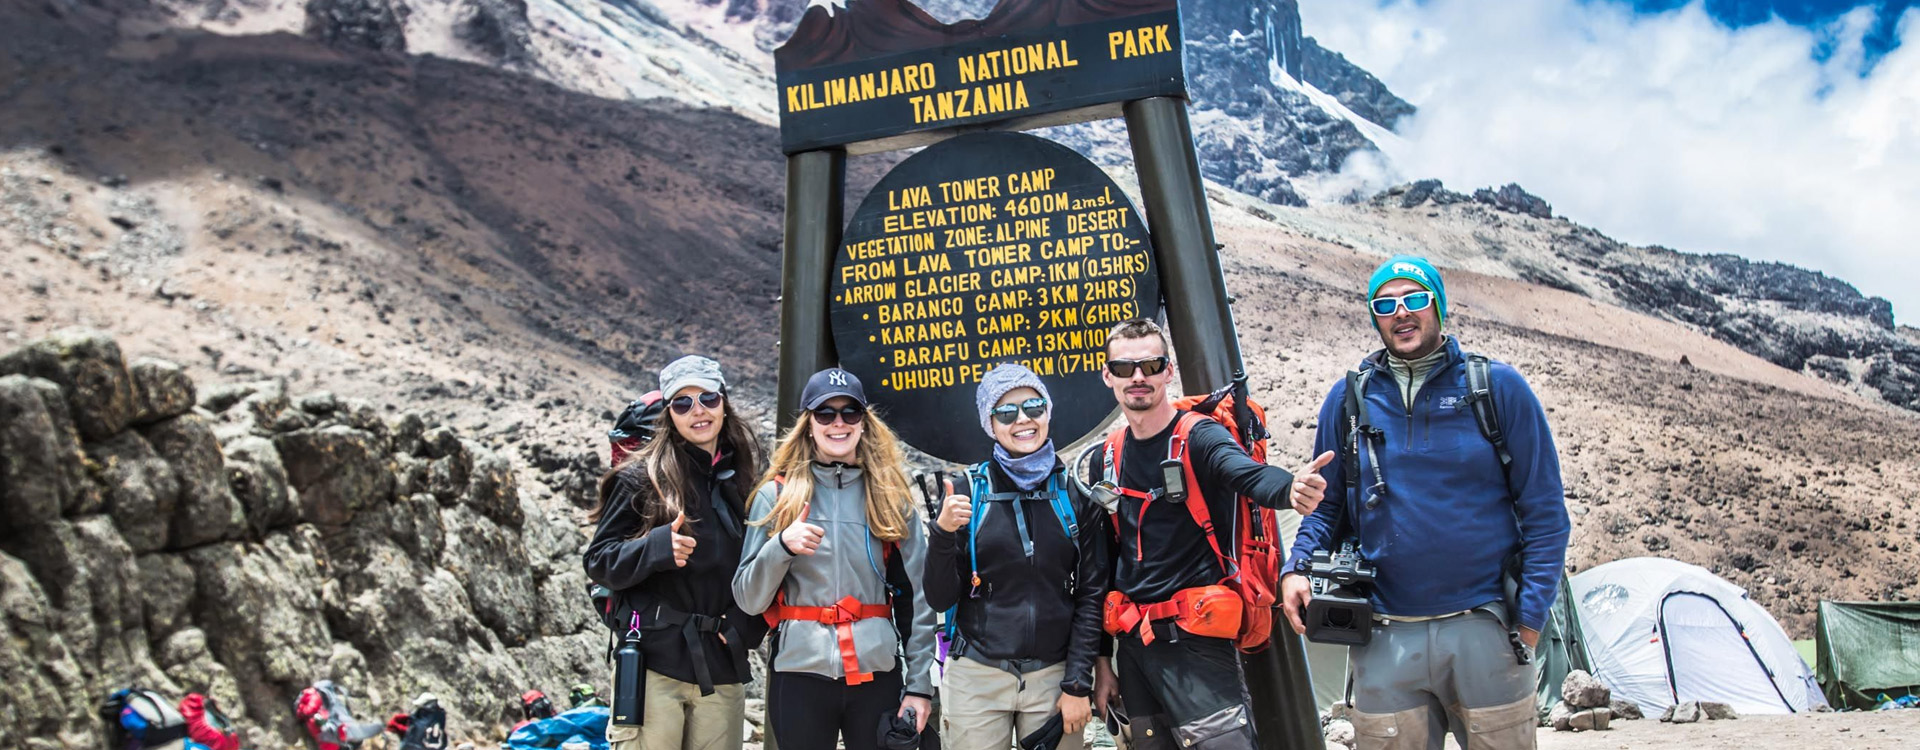 Kilimanjaro FAQ’s